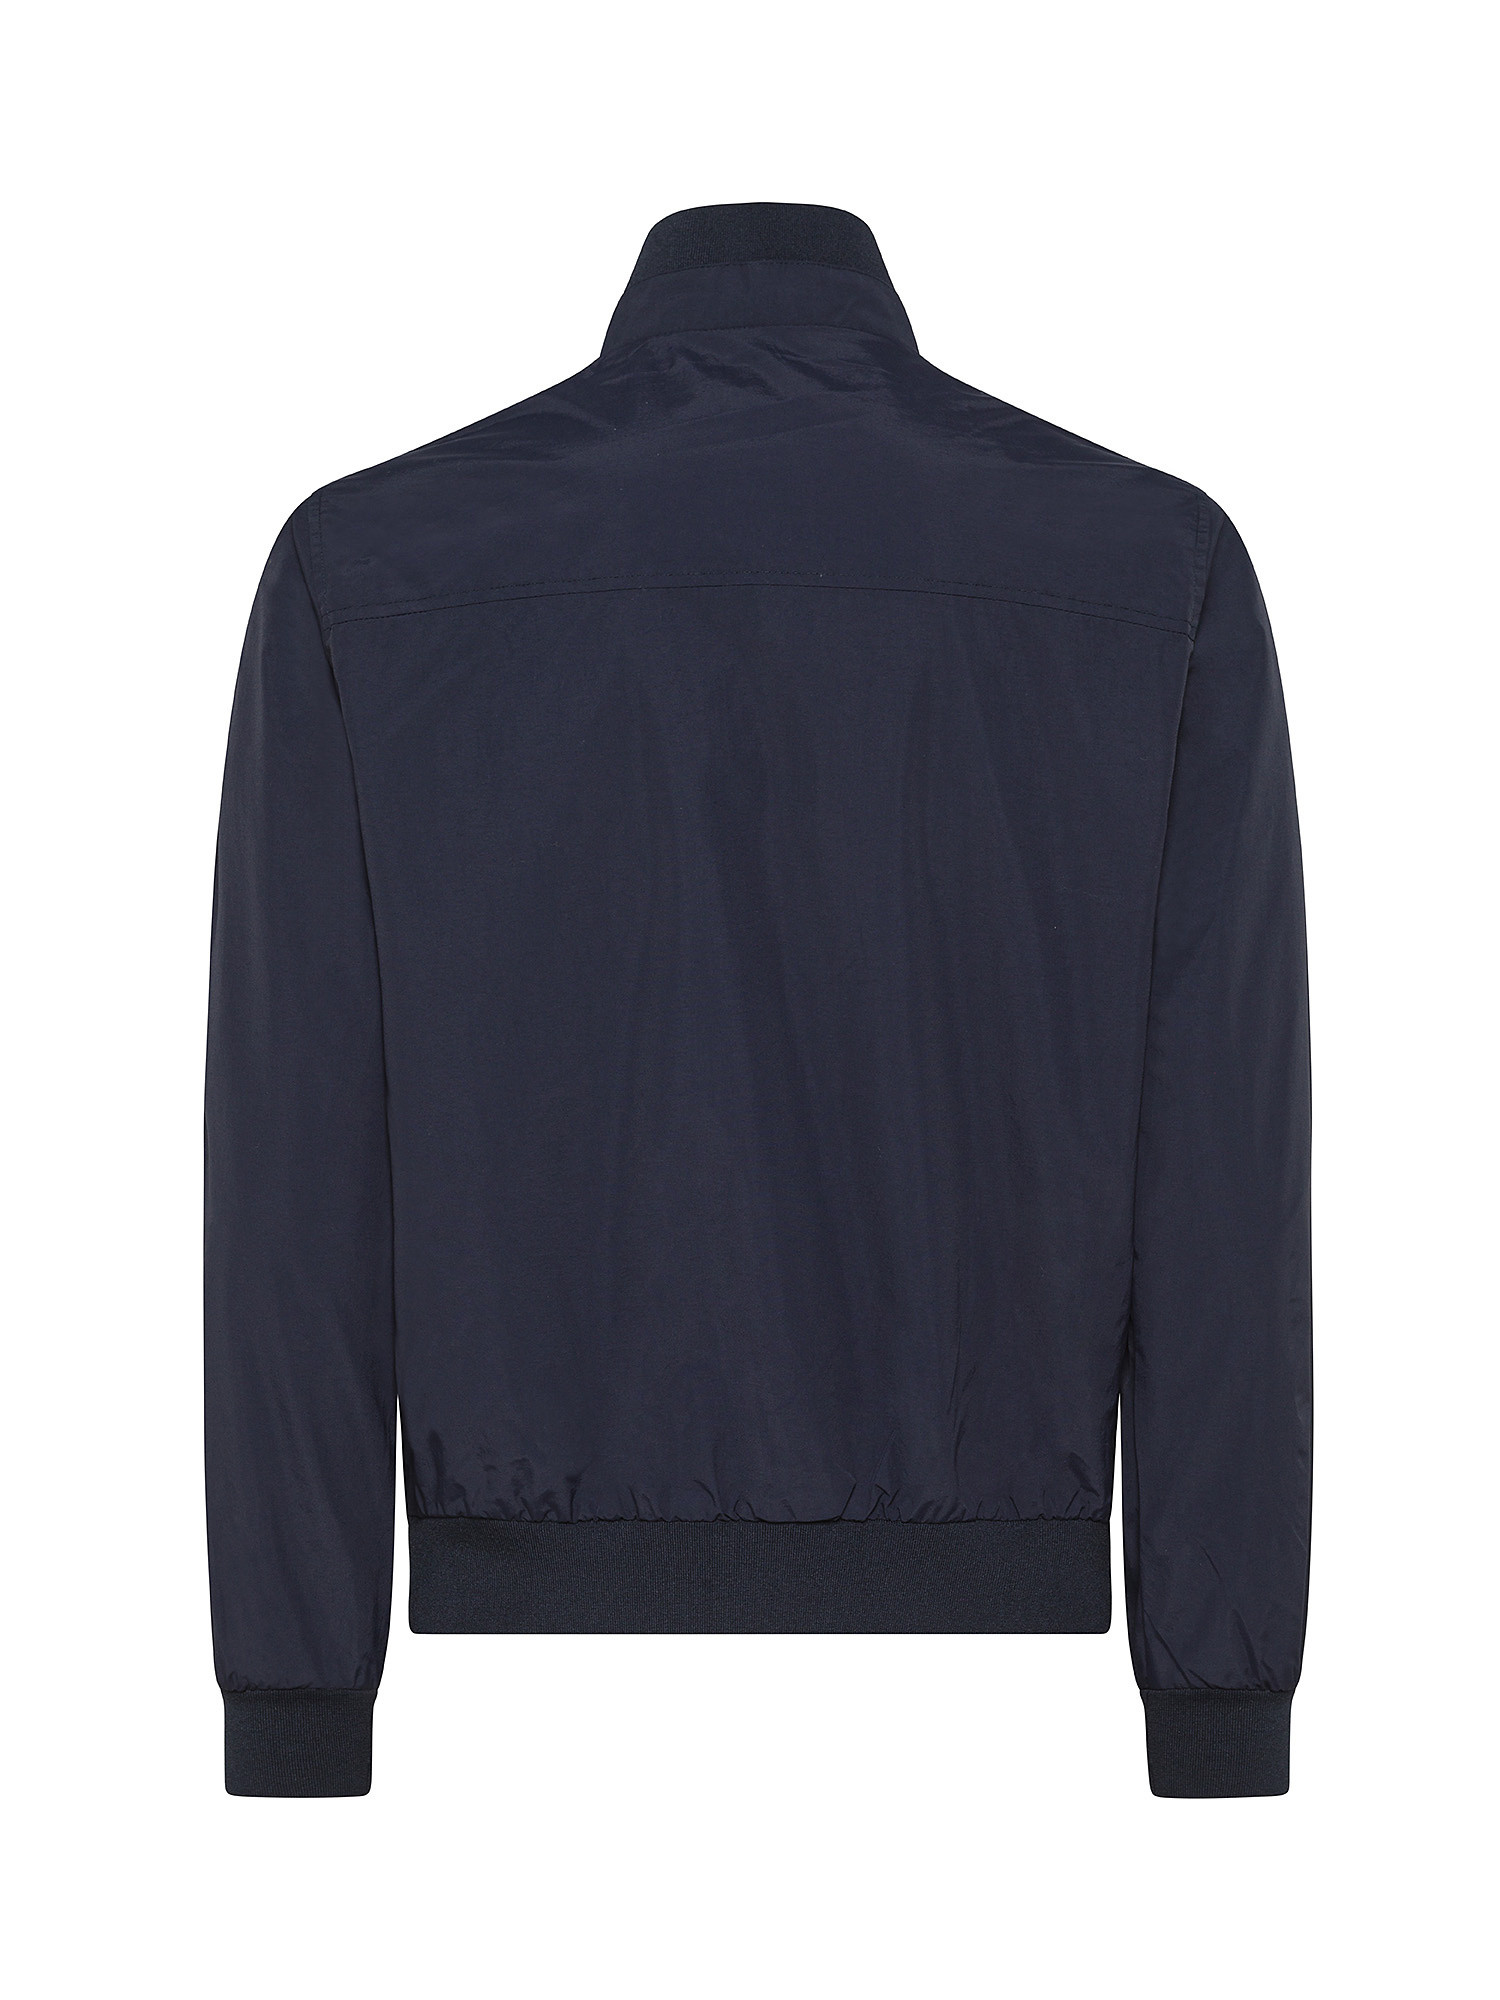 JCT - Full zip jacket, Dark Blue, large image number 1